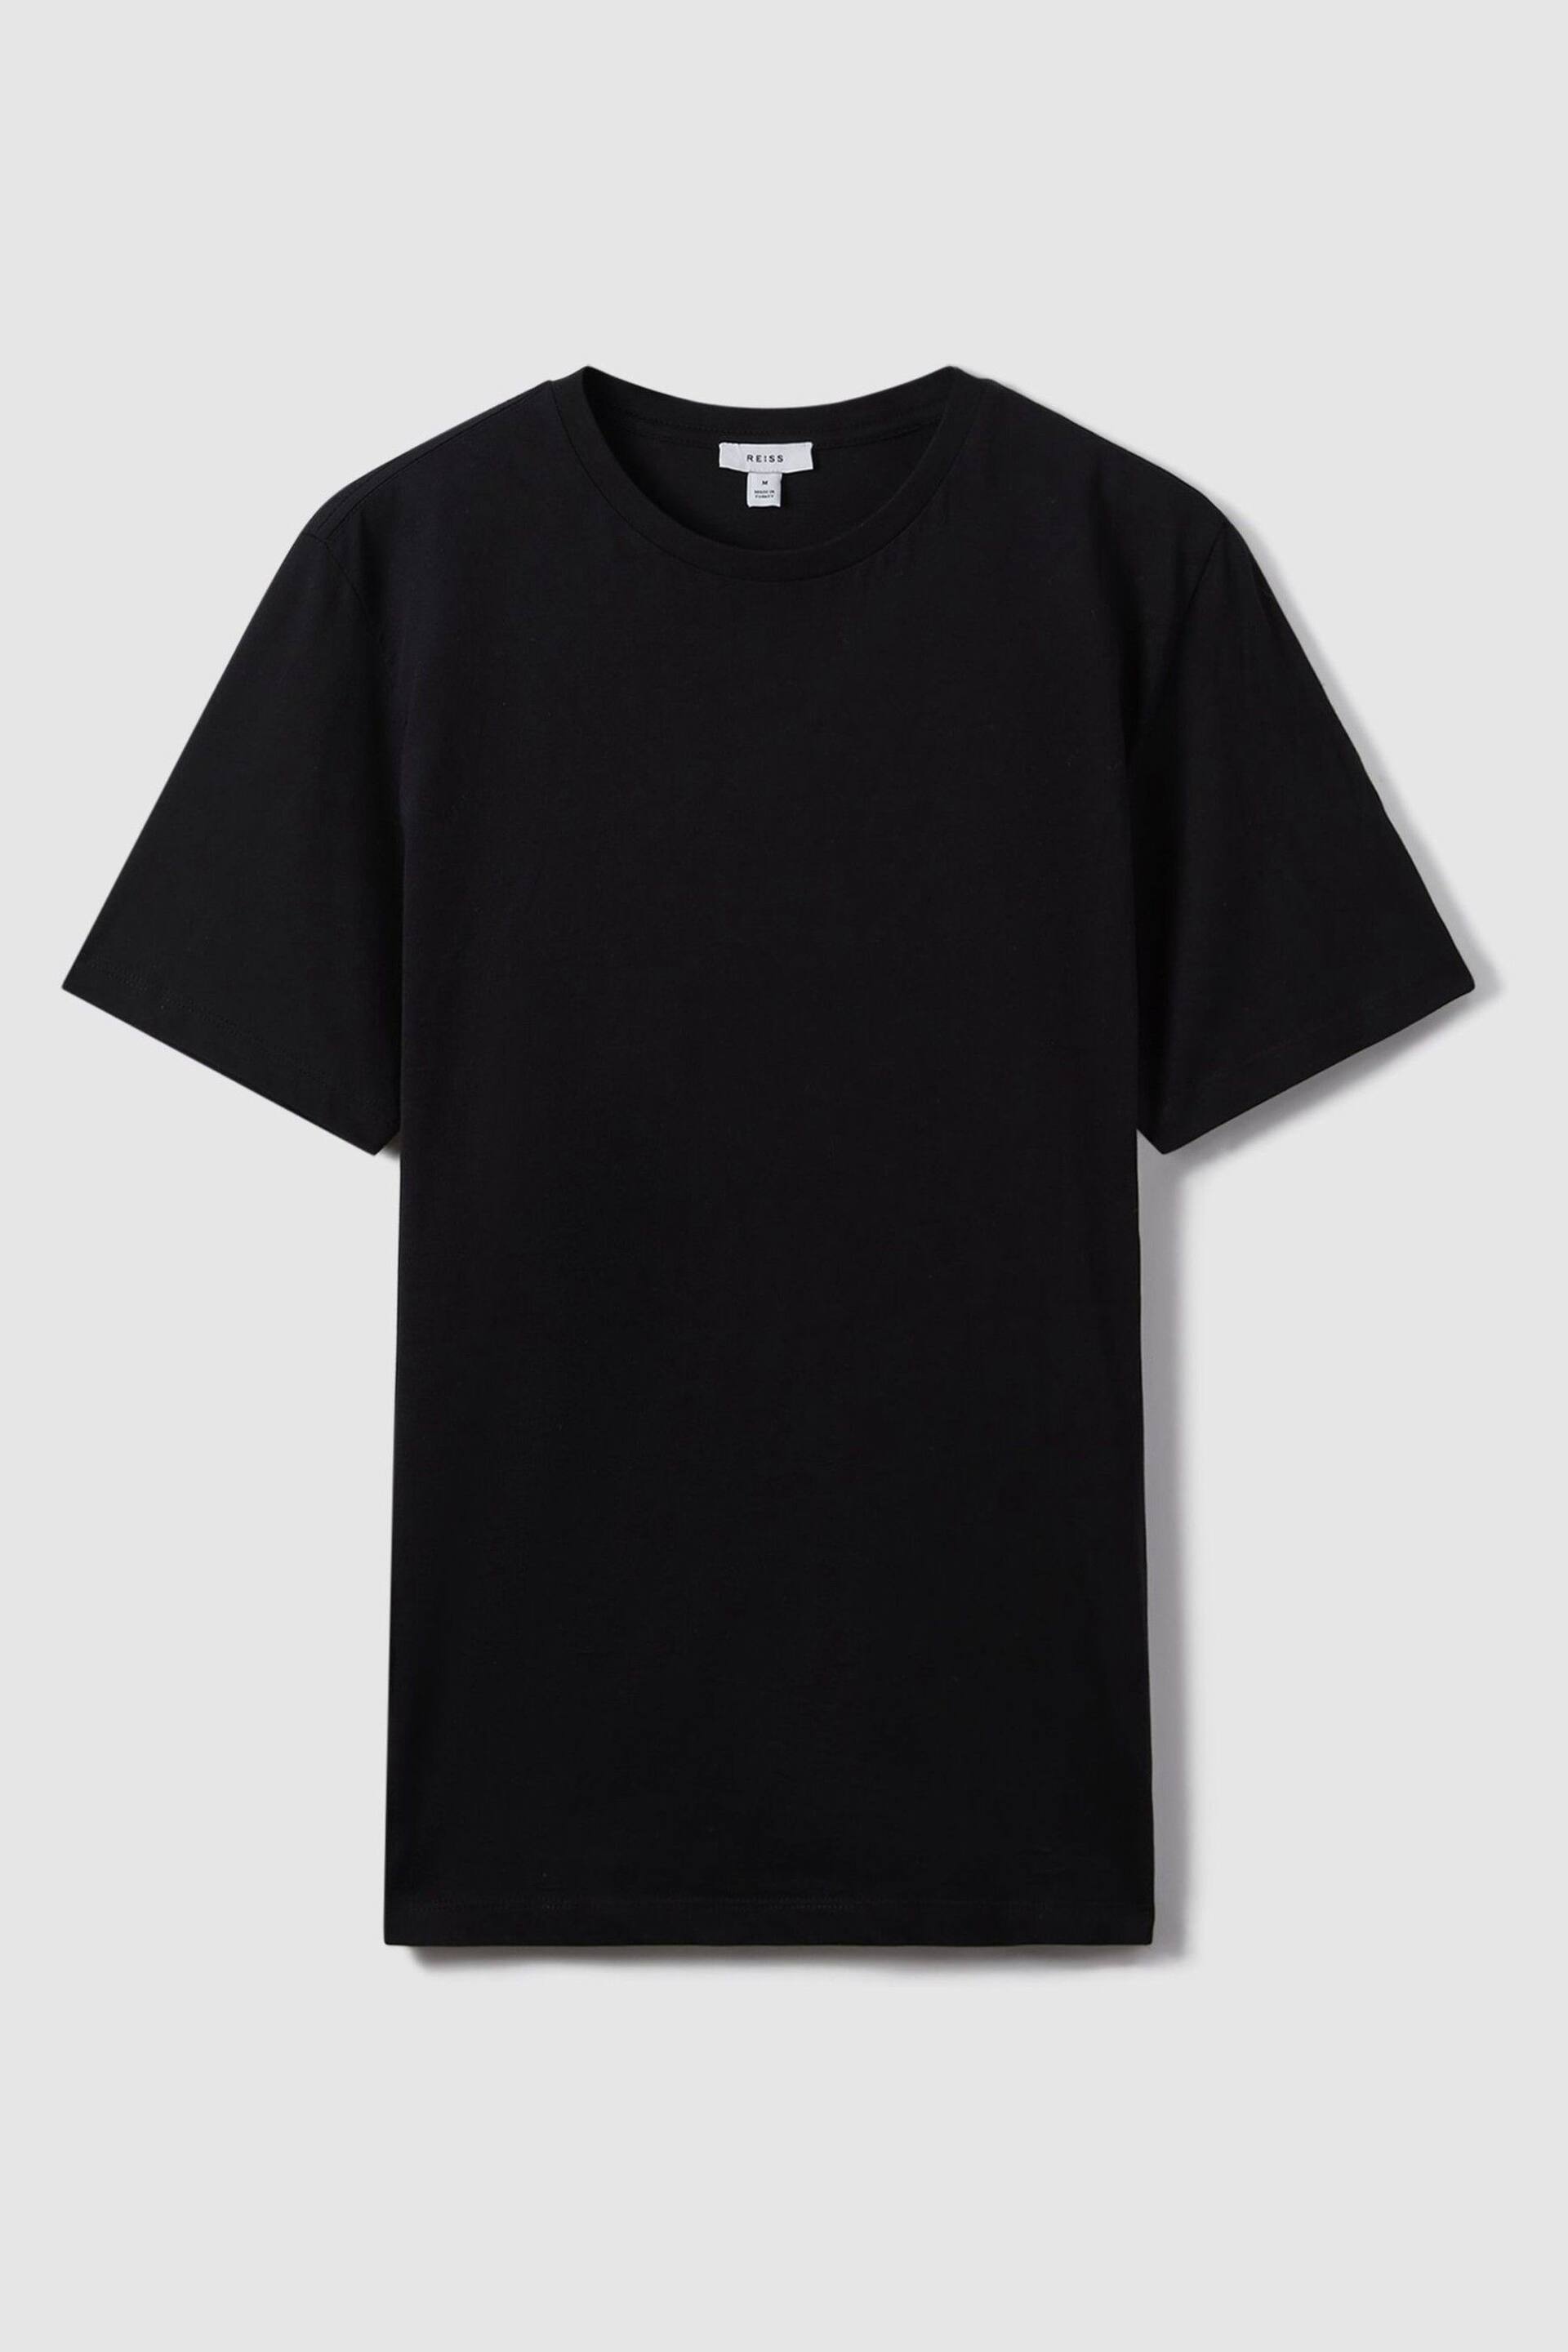 Reiss Black Bless Marl Crew Neck T-Shirt - Image 2 of 8